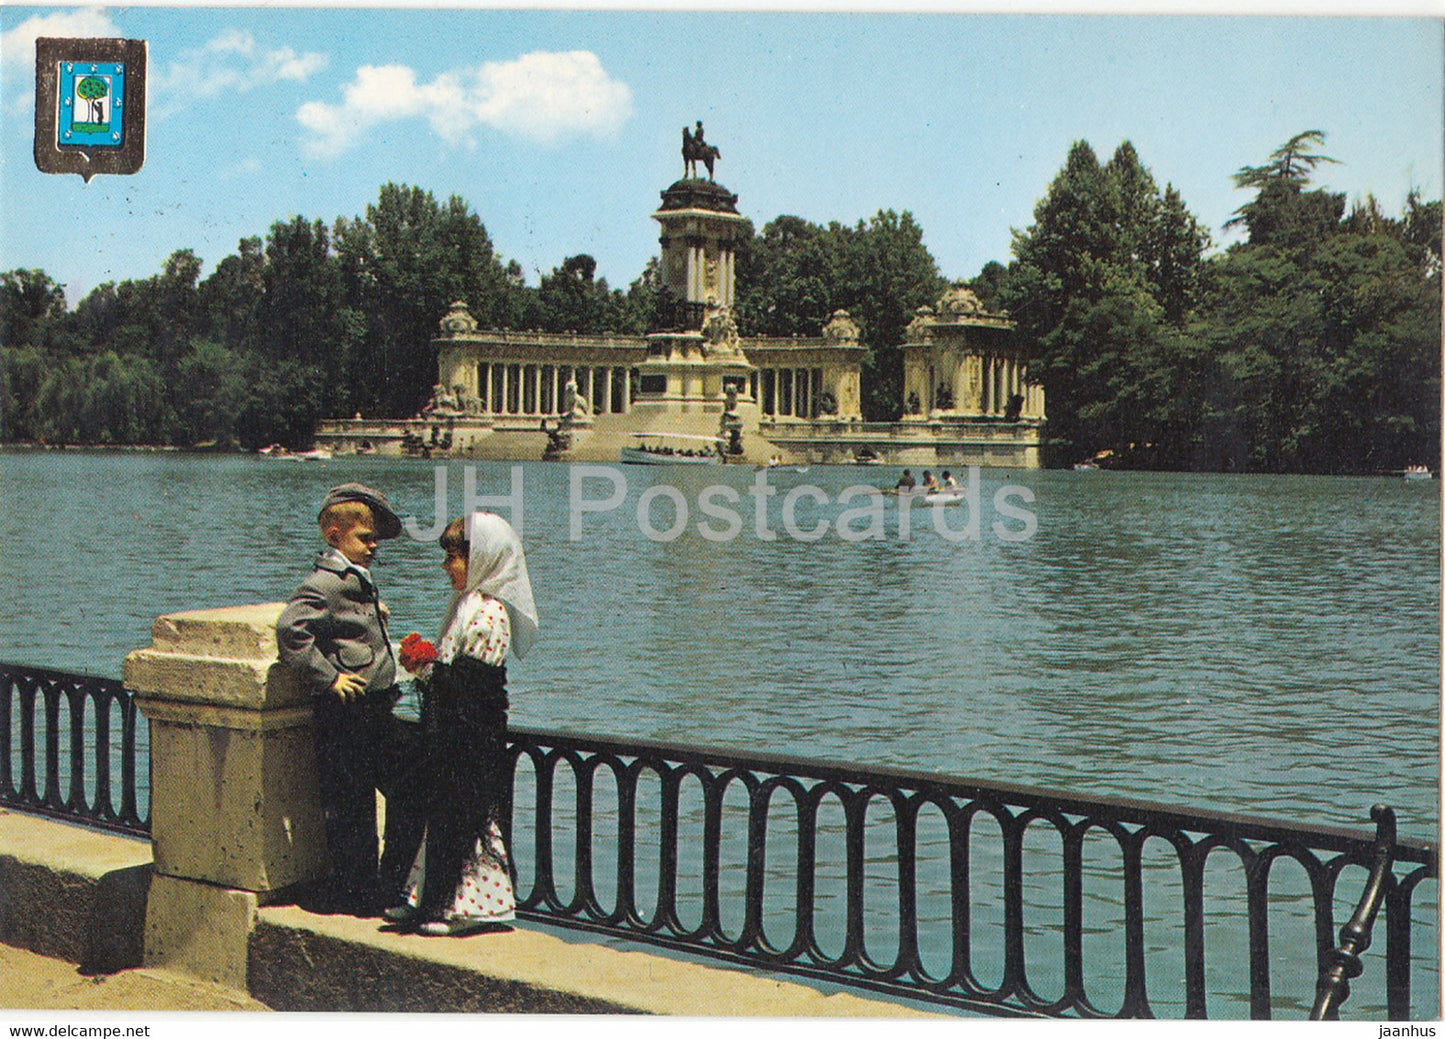 Madrid - Estanque del Retiro y parejita tipica - Retiro pond and typical couple - children - 153 - Spain - used - JH Postcards